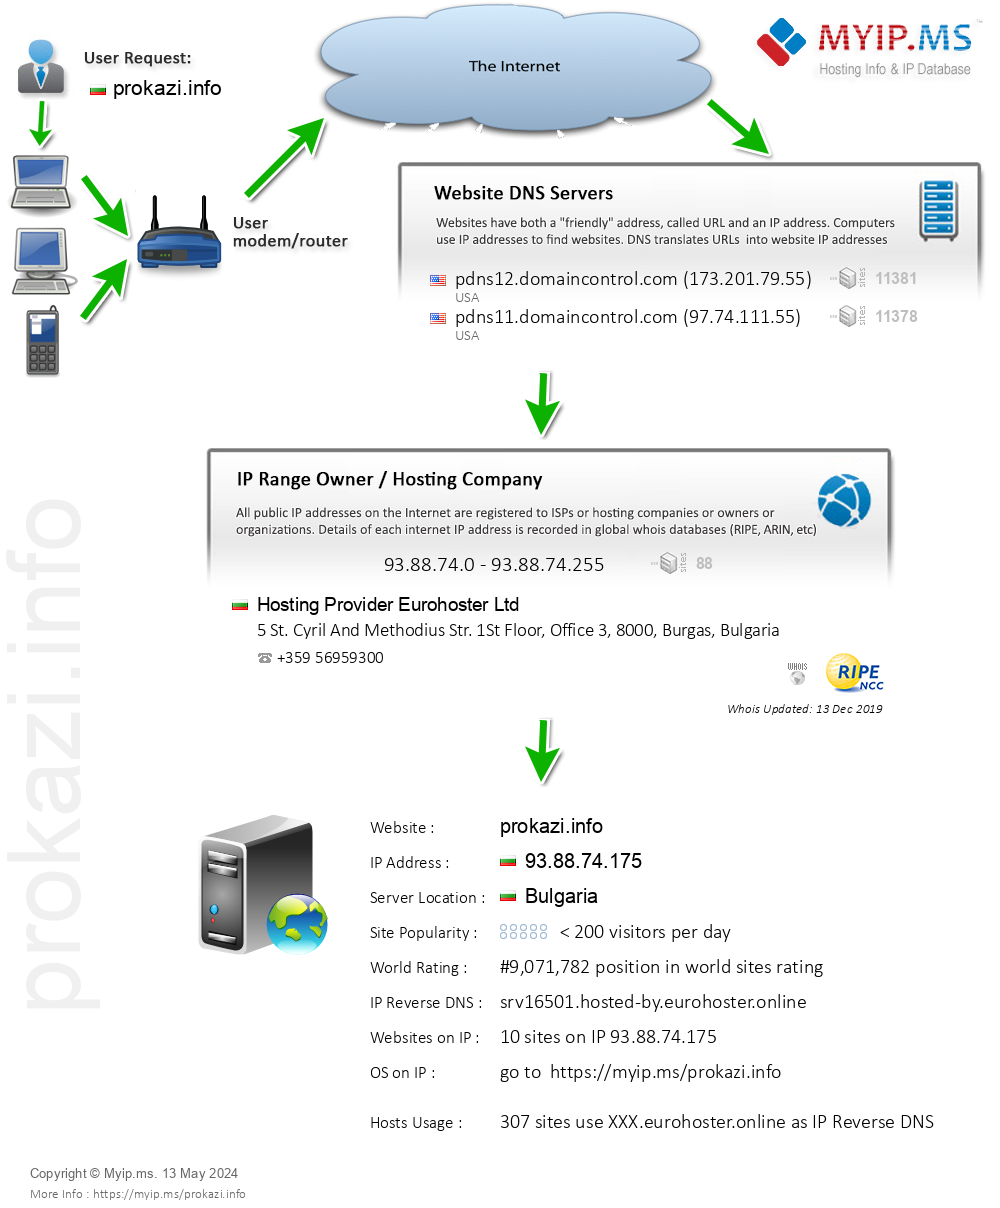 Prokazi.info - Website Hosting Visual IP Diagram